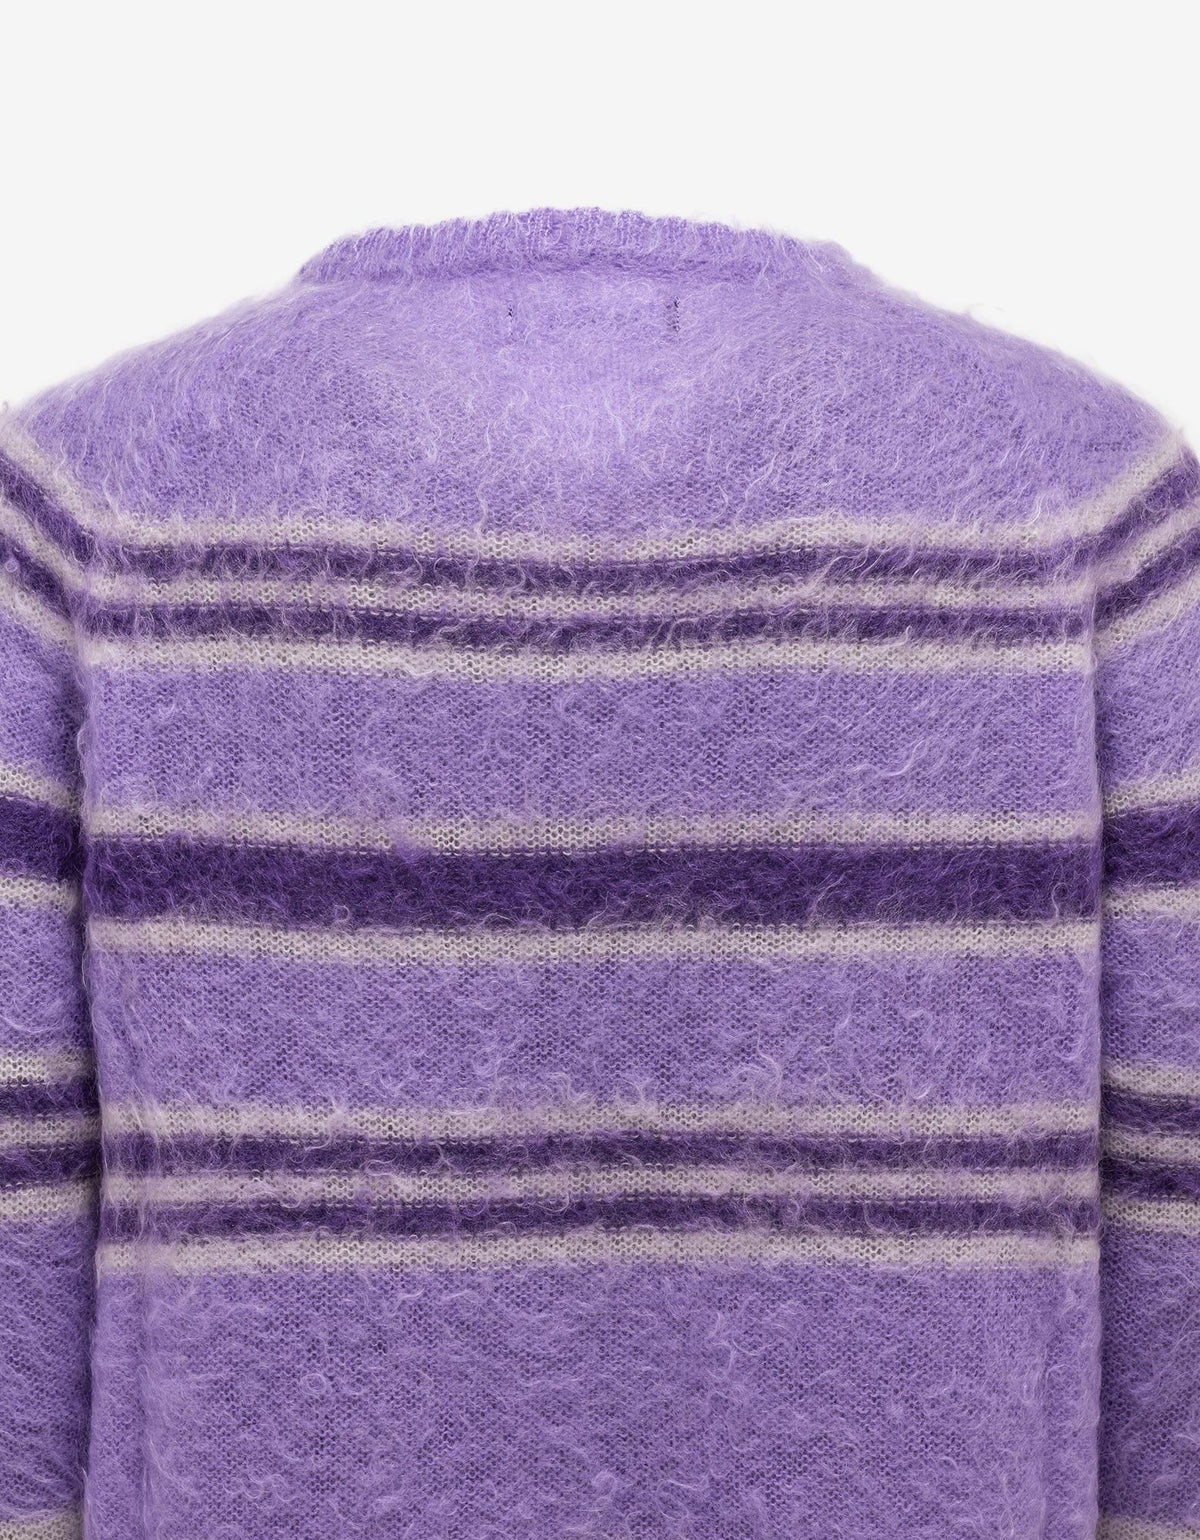 Nahmias Nahmias Purple Striped Knit Sweater